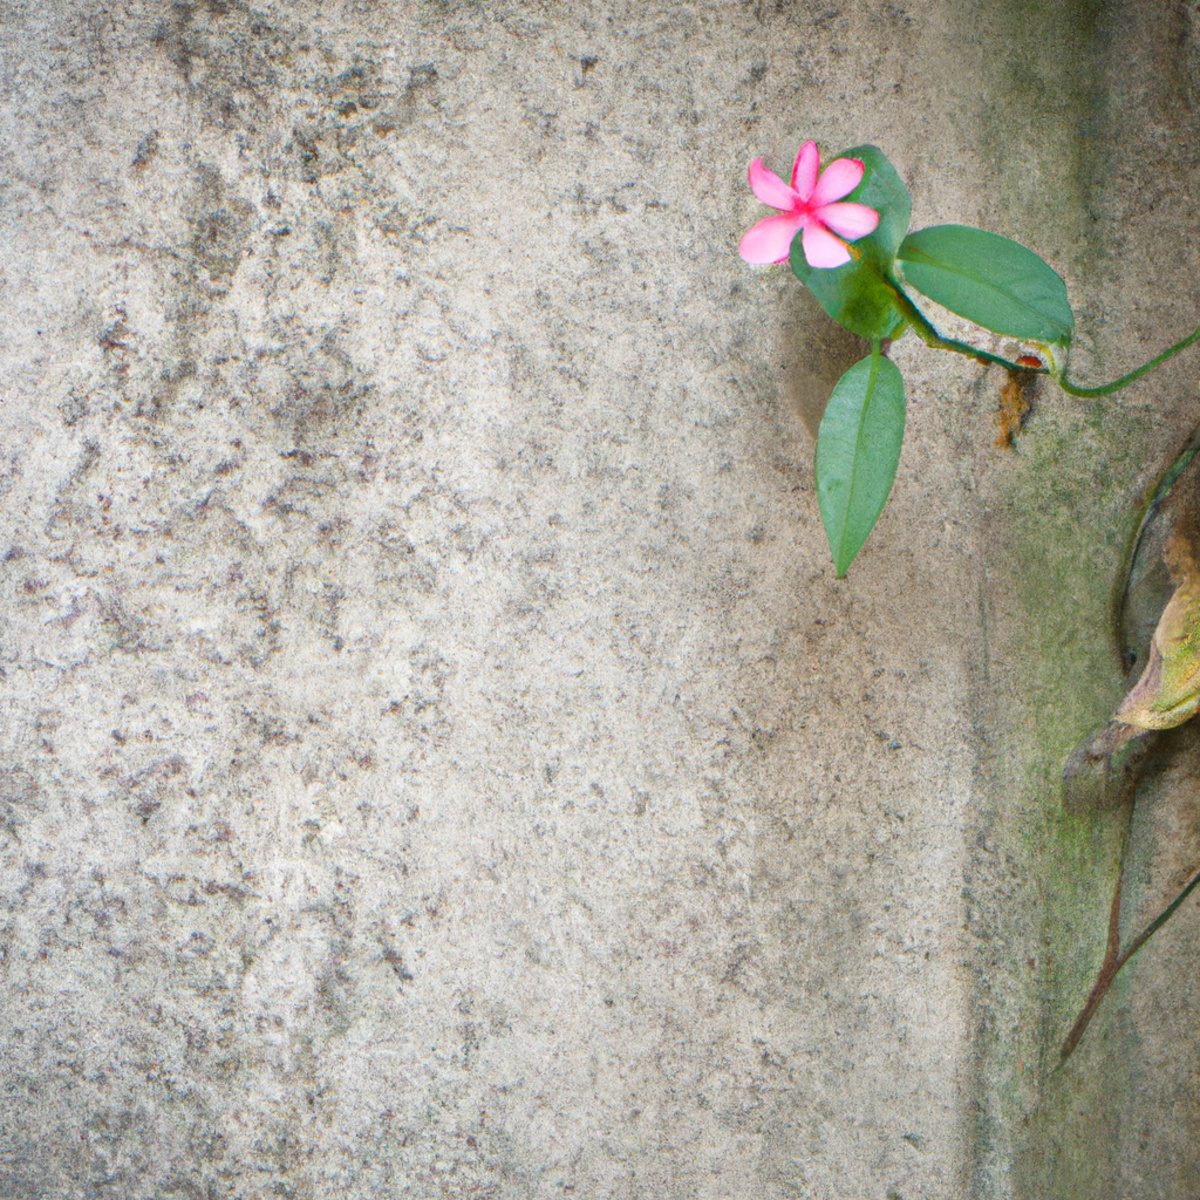 Blooming flowers defy concrete wall, symbolizing Hemophagocytic lymphohistiocytosis (HLH) survivors' indomitable spirit and triumph over adversity.